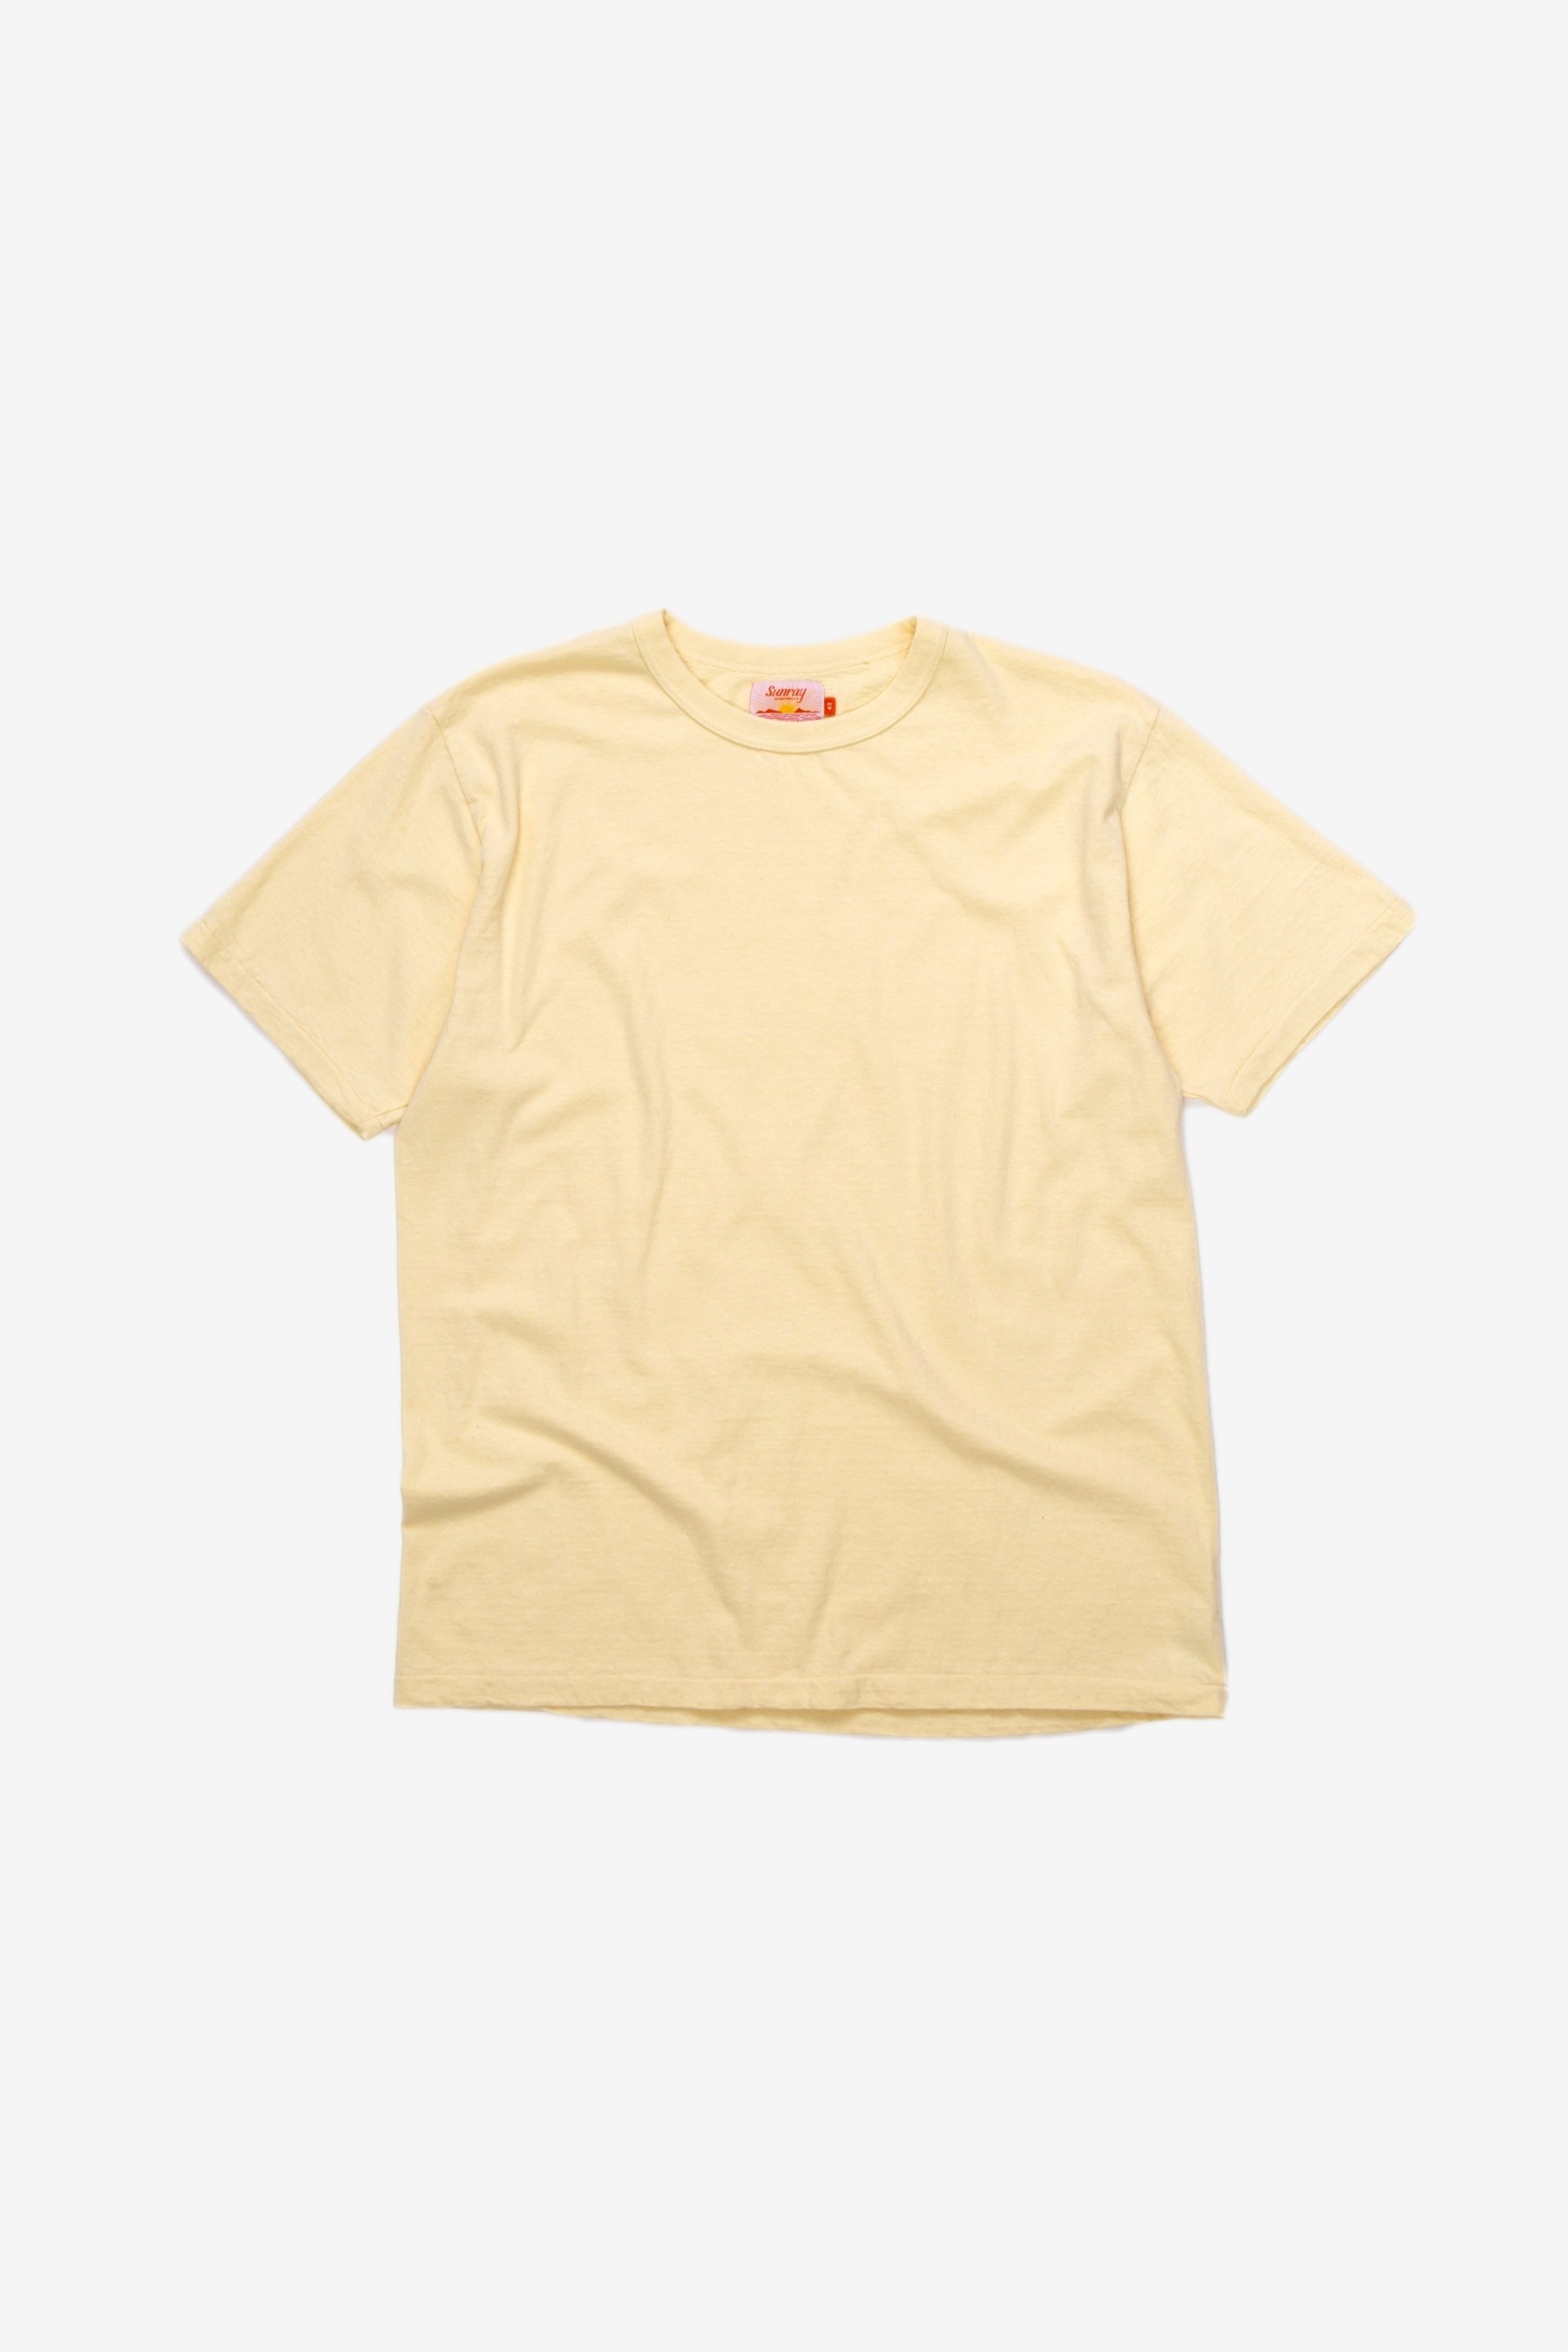 Makaha Short Sleeve T-Shirt in Dark Navy - Sunray Sportswear